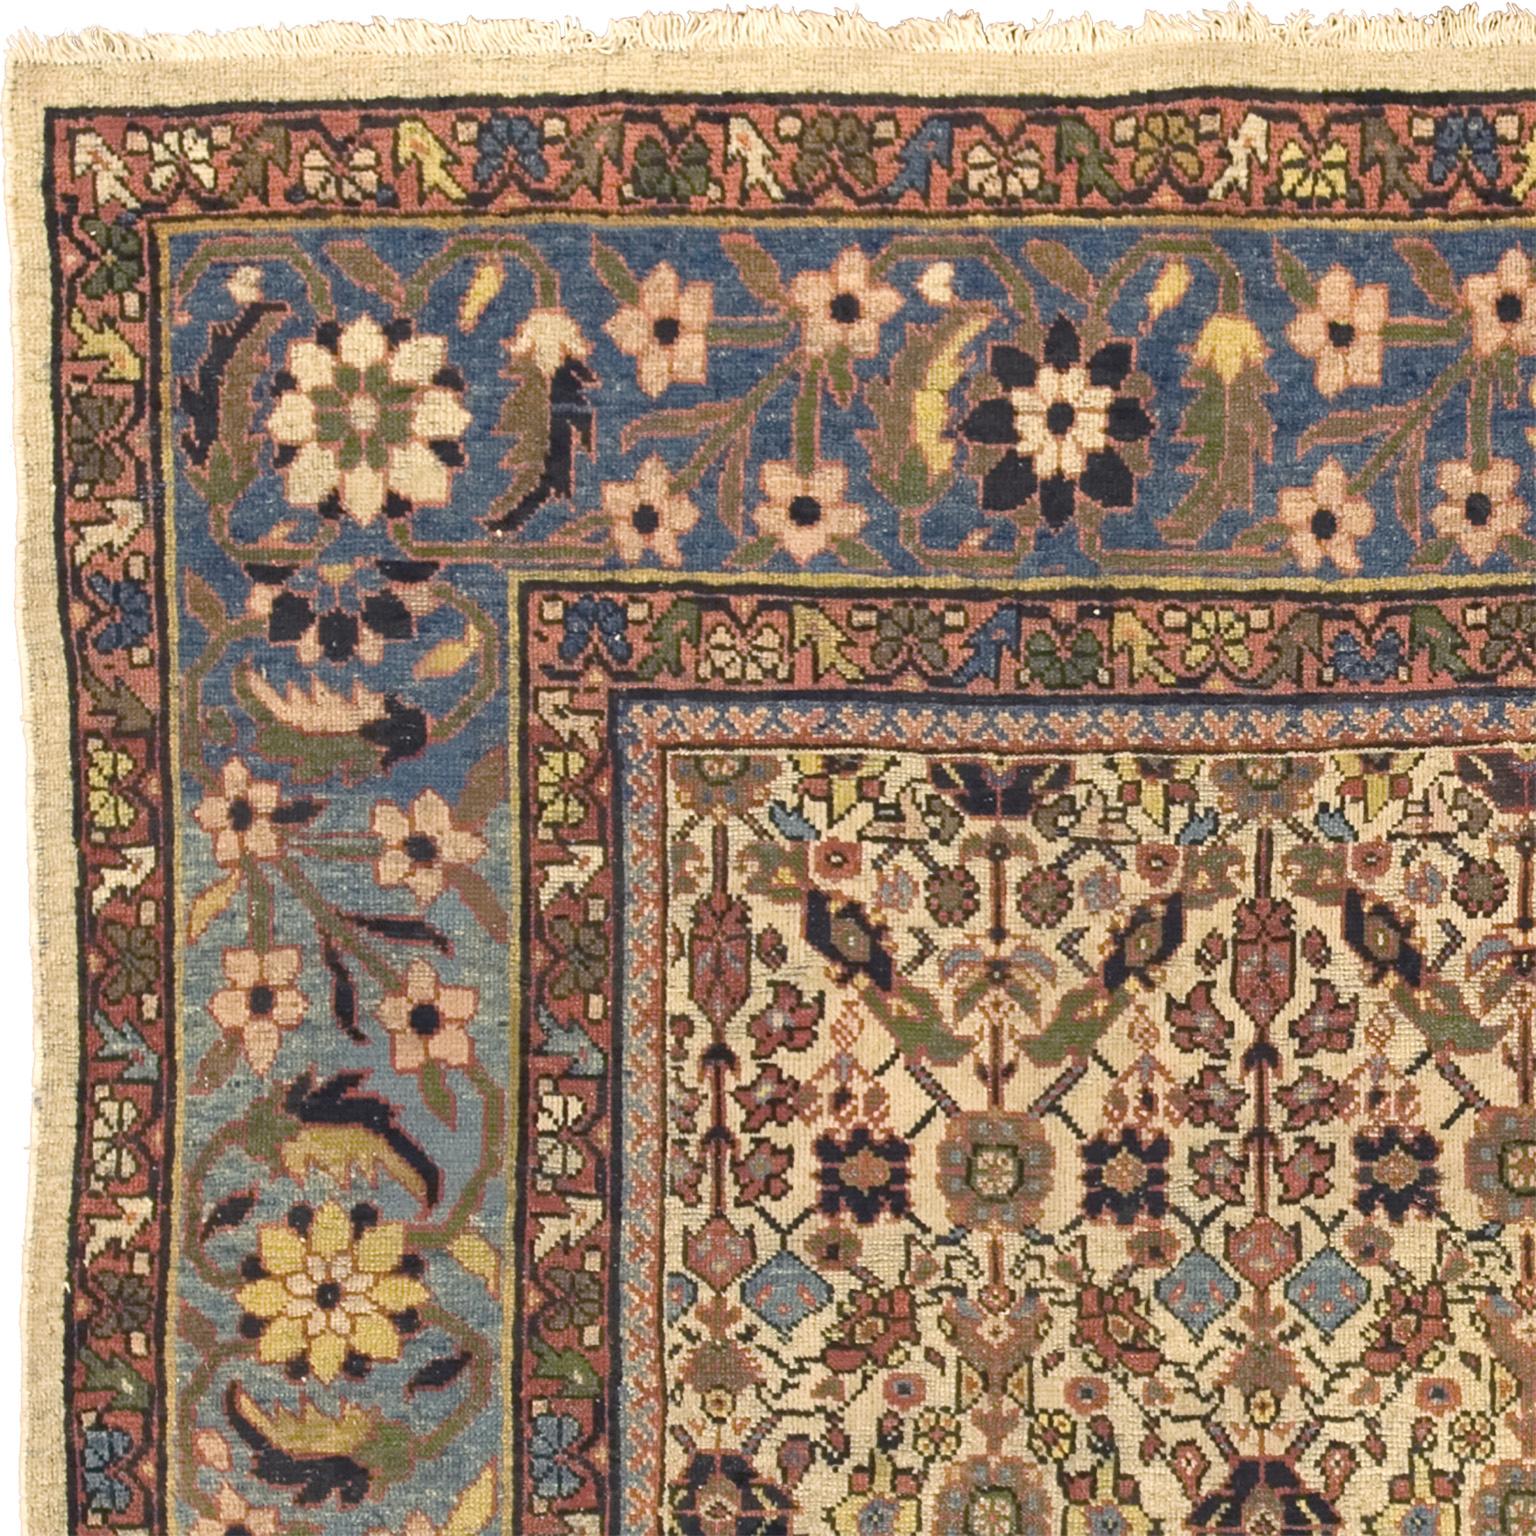 Persia ca. 1900
Measures: 12'10